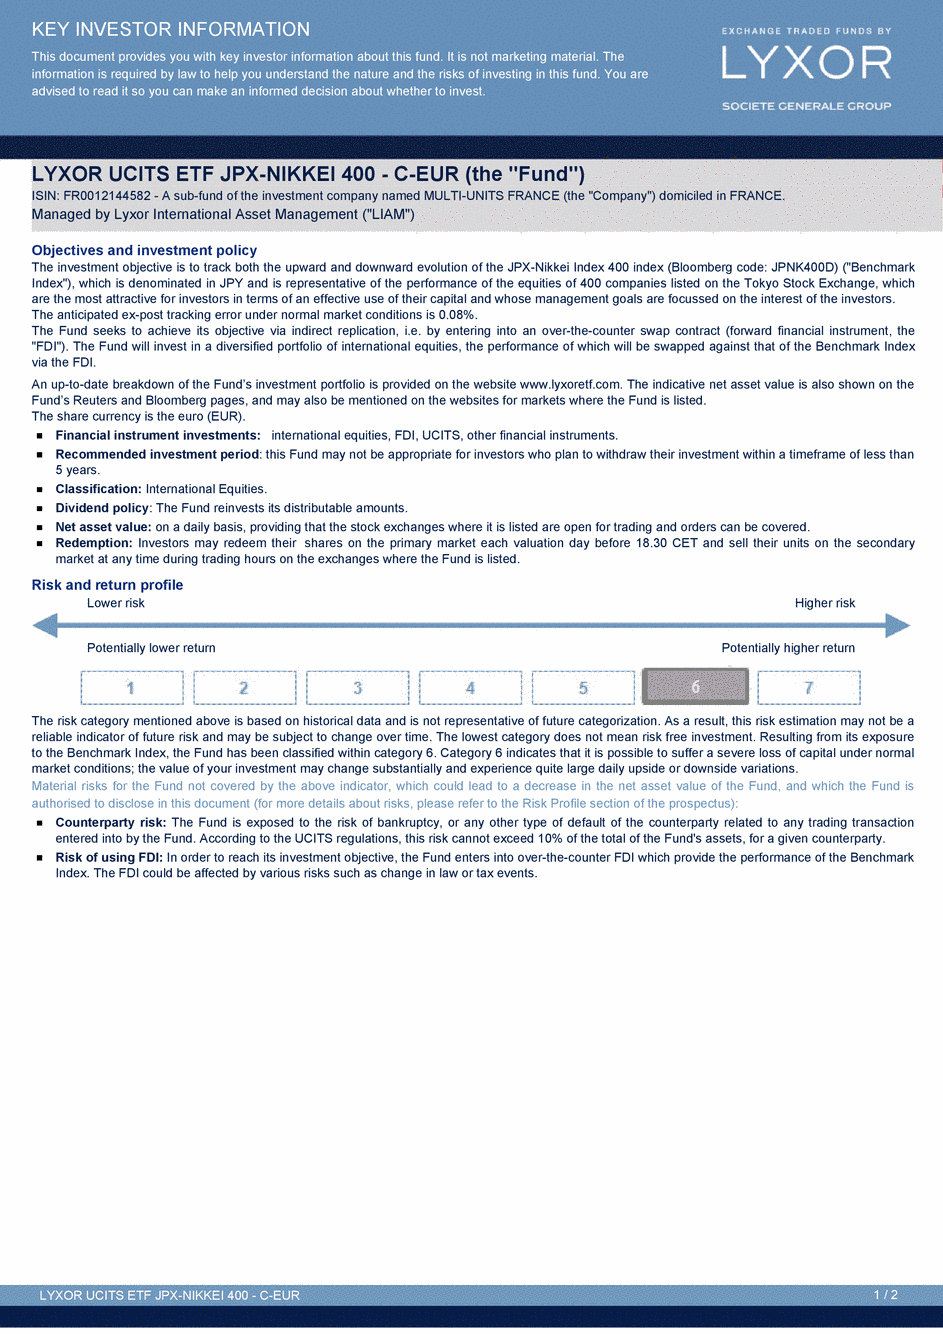 DICI LYXOR JPX-NIKKEI 400 UCITS ETF (DR) C-EUR - 10/09/2014 - Anglais